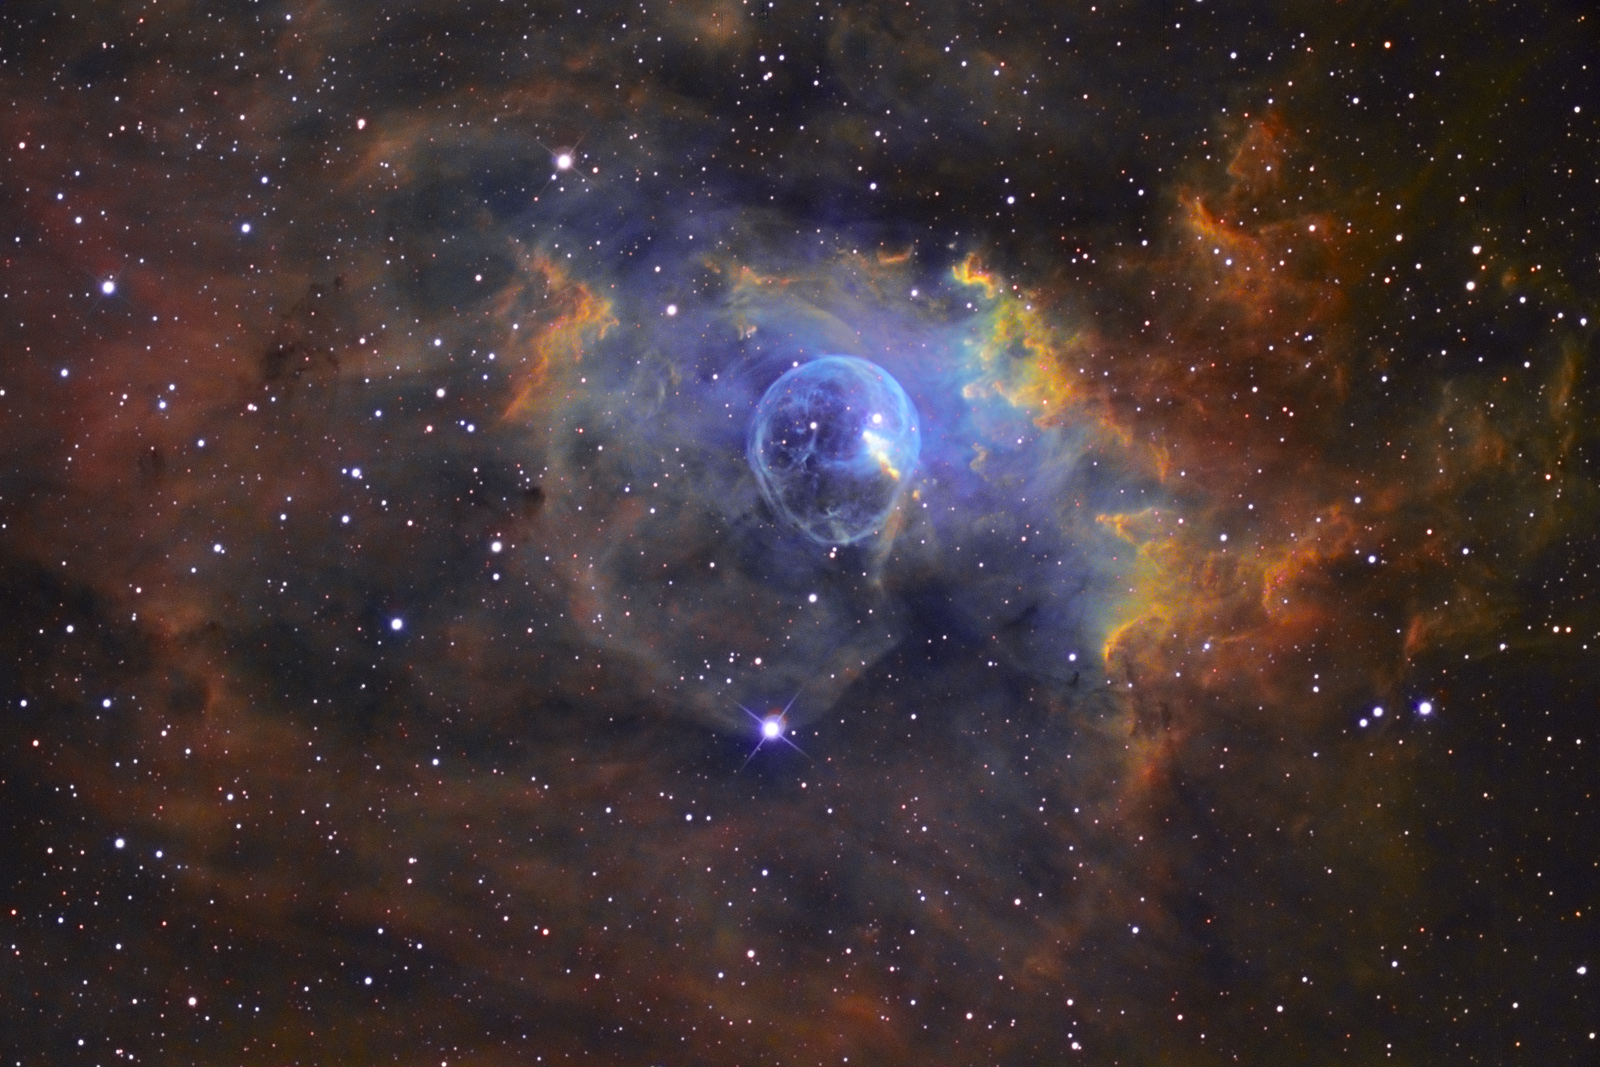 NGC 7635: tumannost' Puzyr'